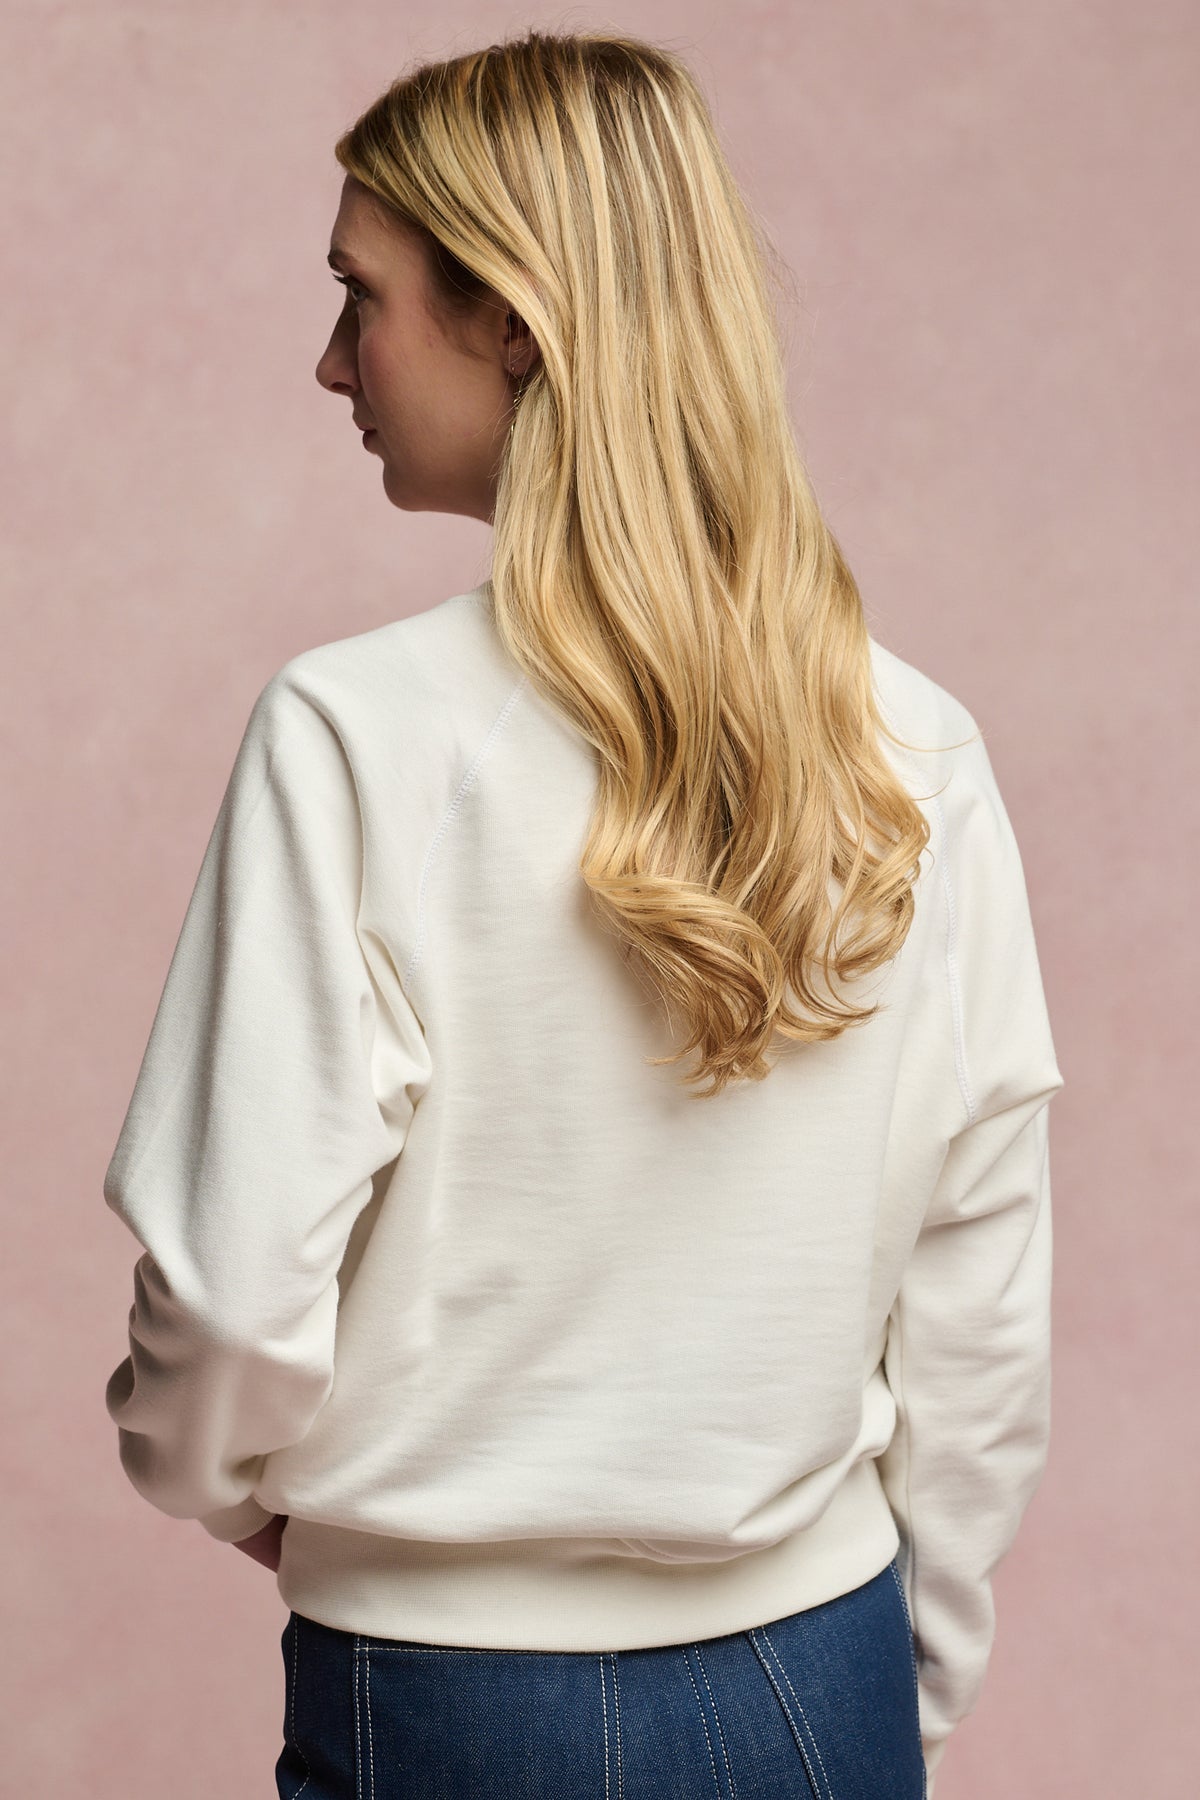 
            Thigh up image of the back of female with long blonde hair wearing raglan sweatshirt in bone